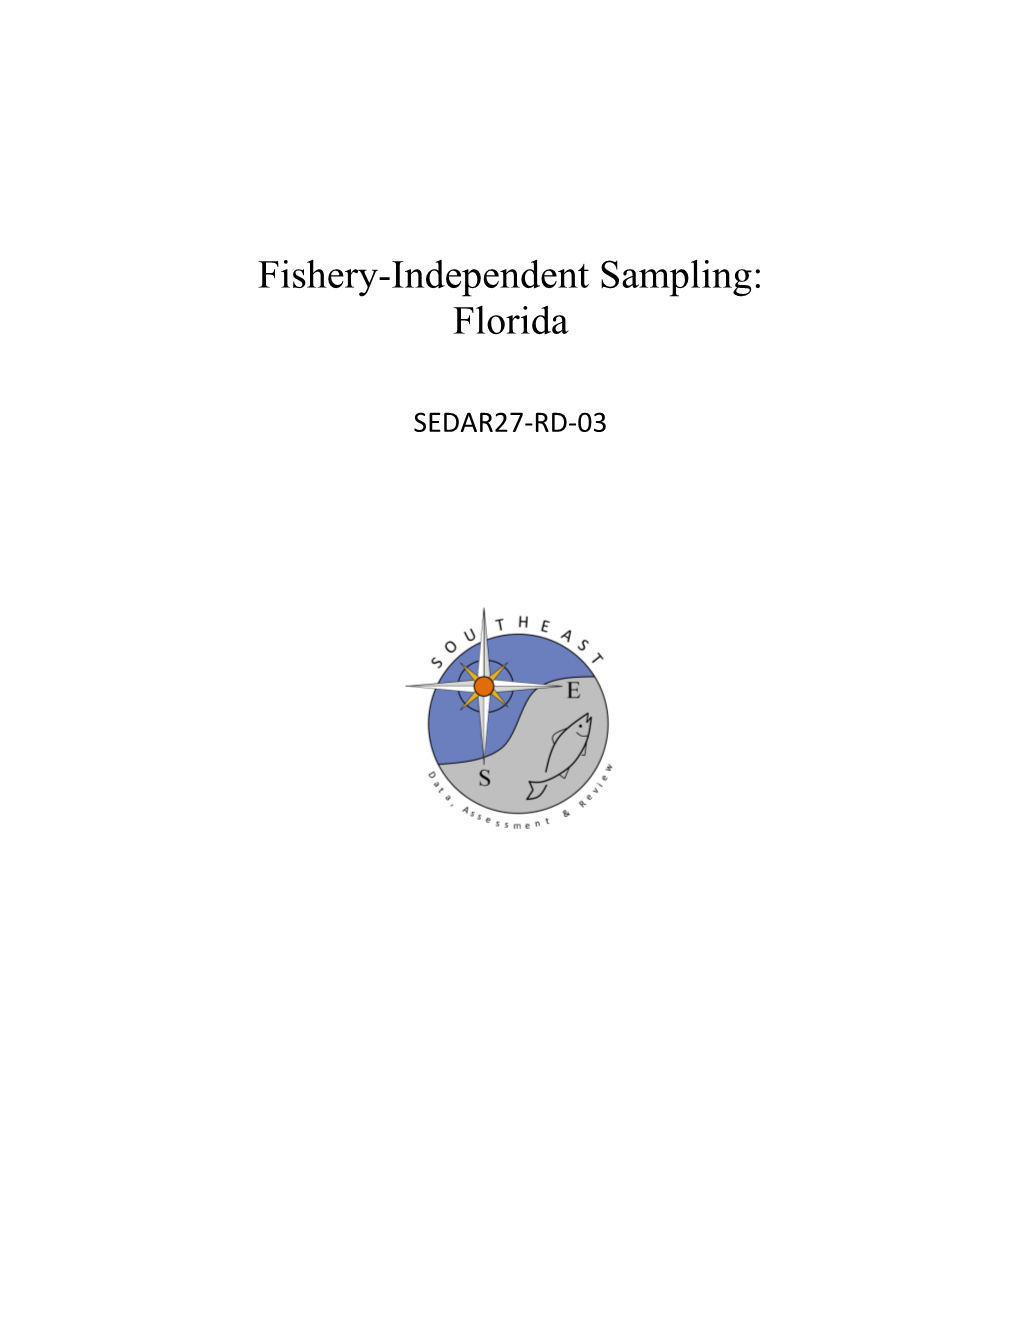 Fishery-Independent Sampling: Florida